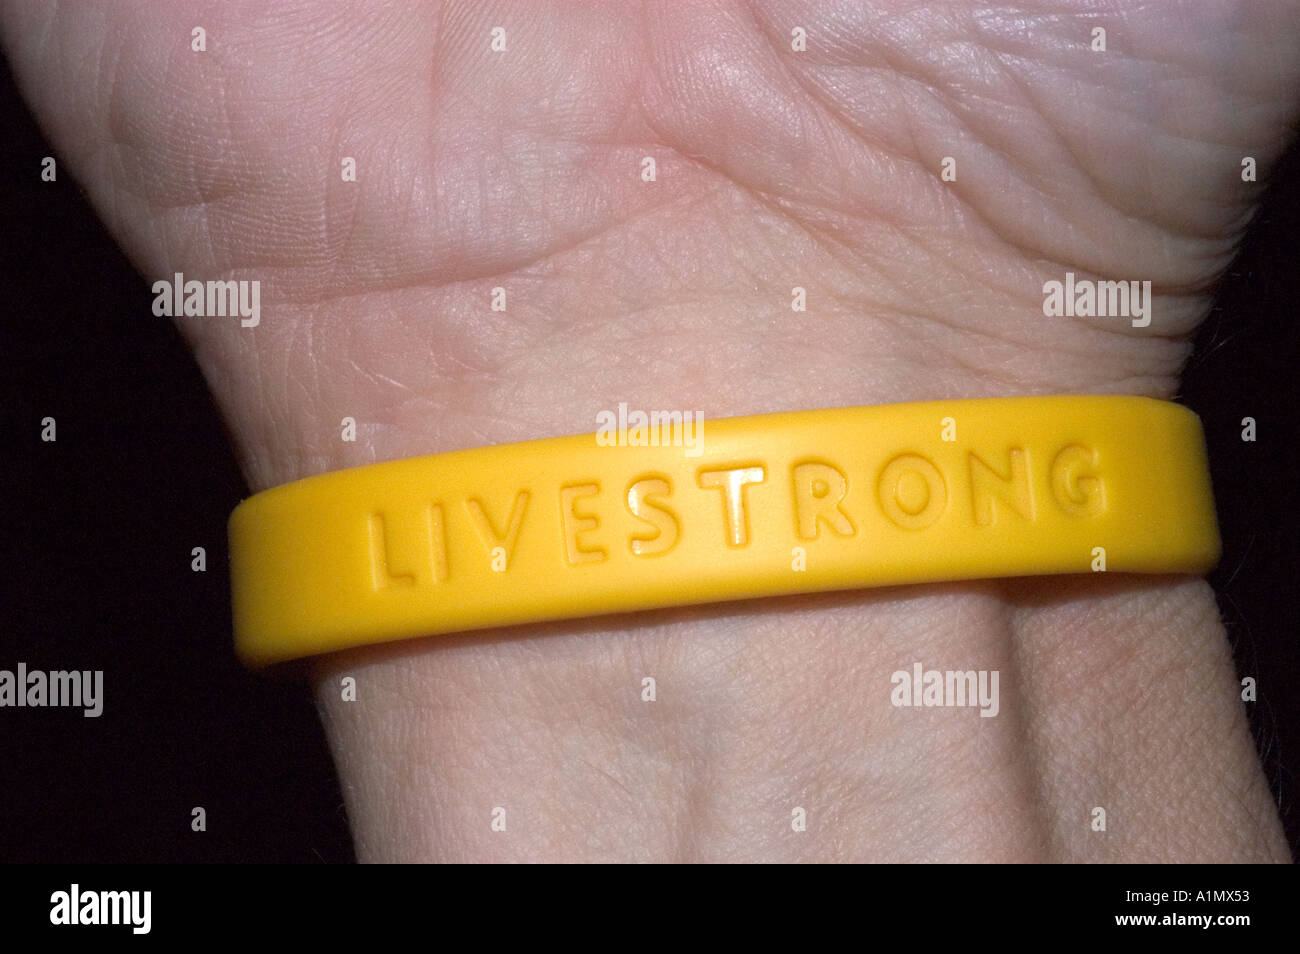 Livestrong armband Stockfotografie - Alamy